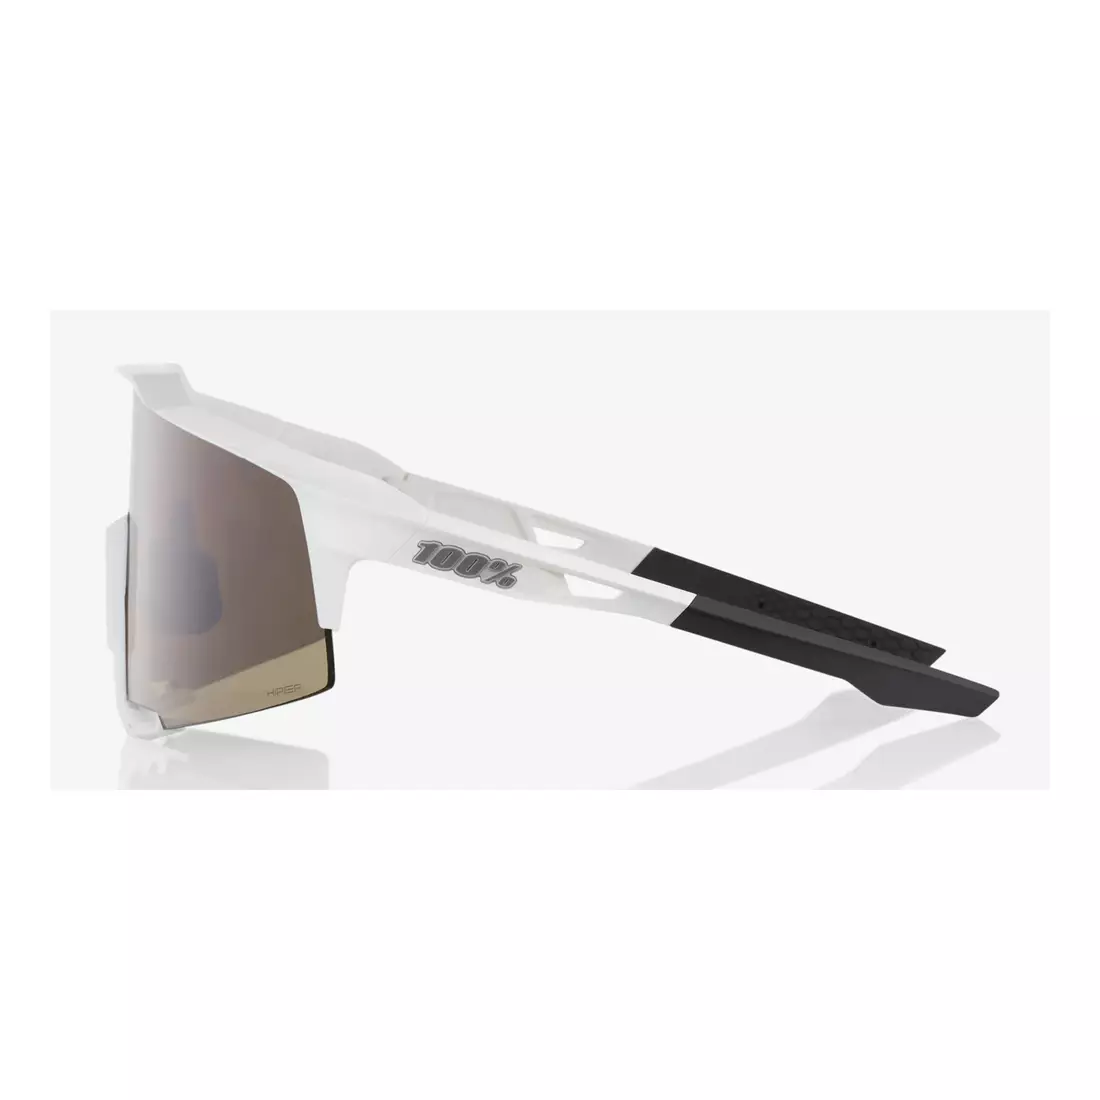 100% sportovní brýle SPEEDCRAFT (HiPER Silver Mirror Lens) Matte White STO-61001-404-03